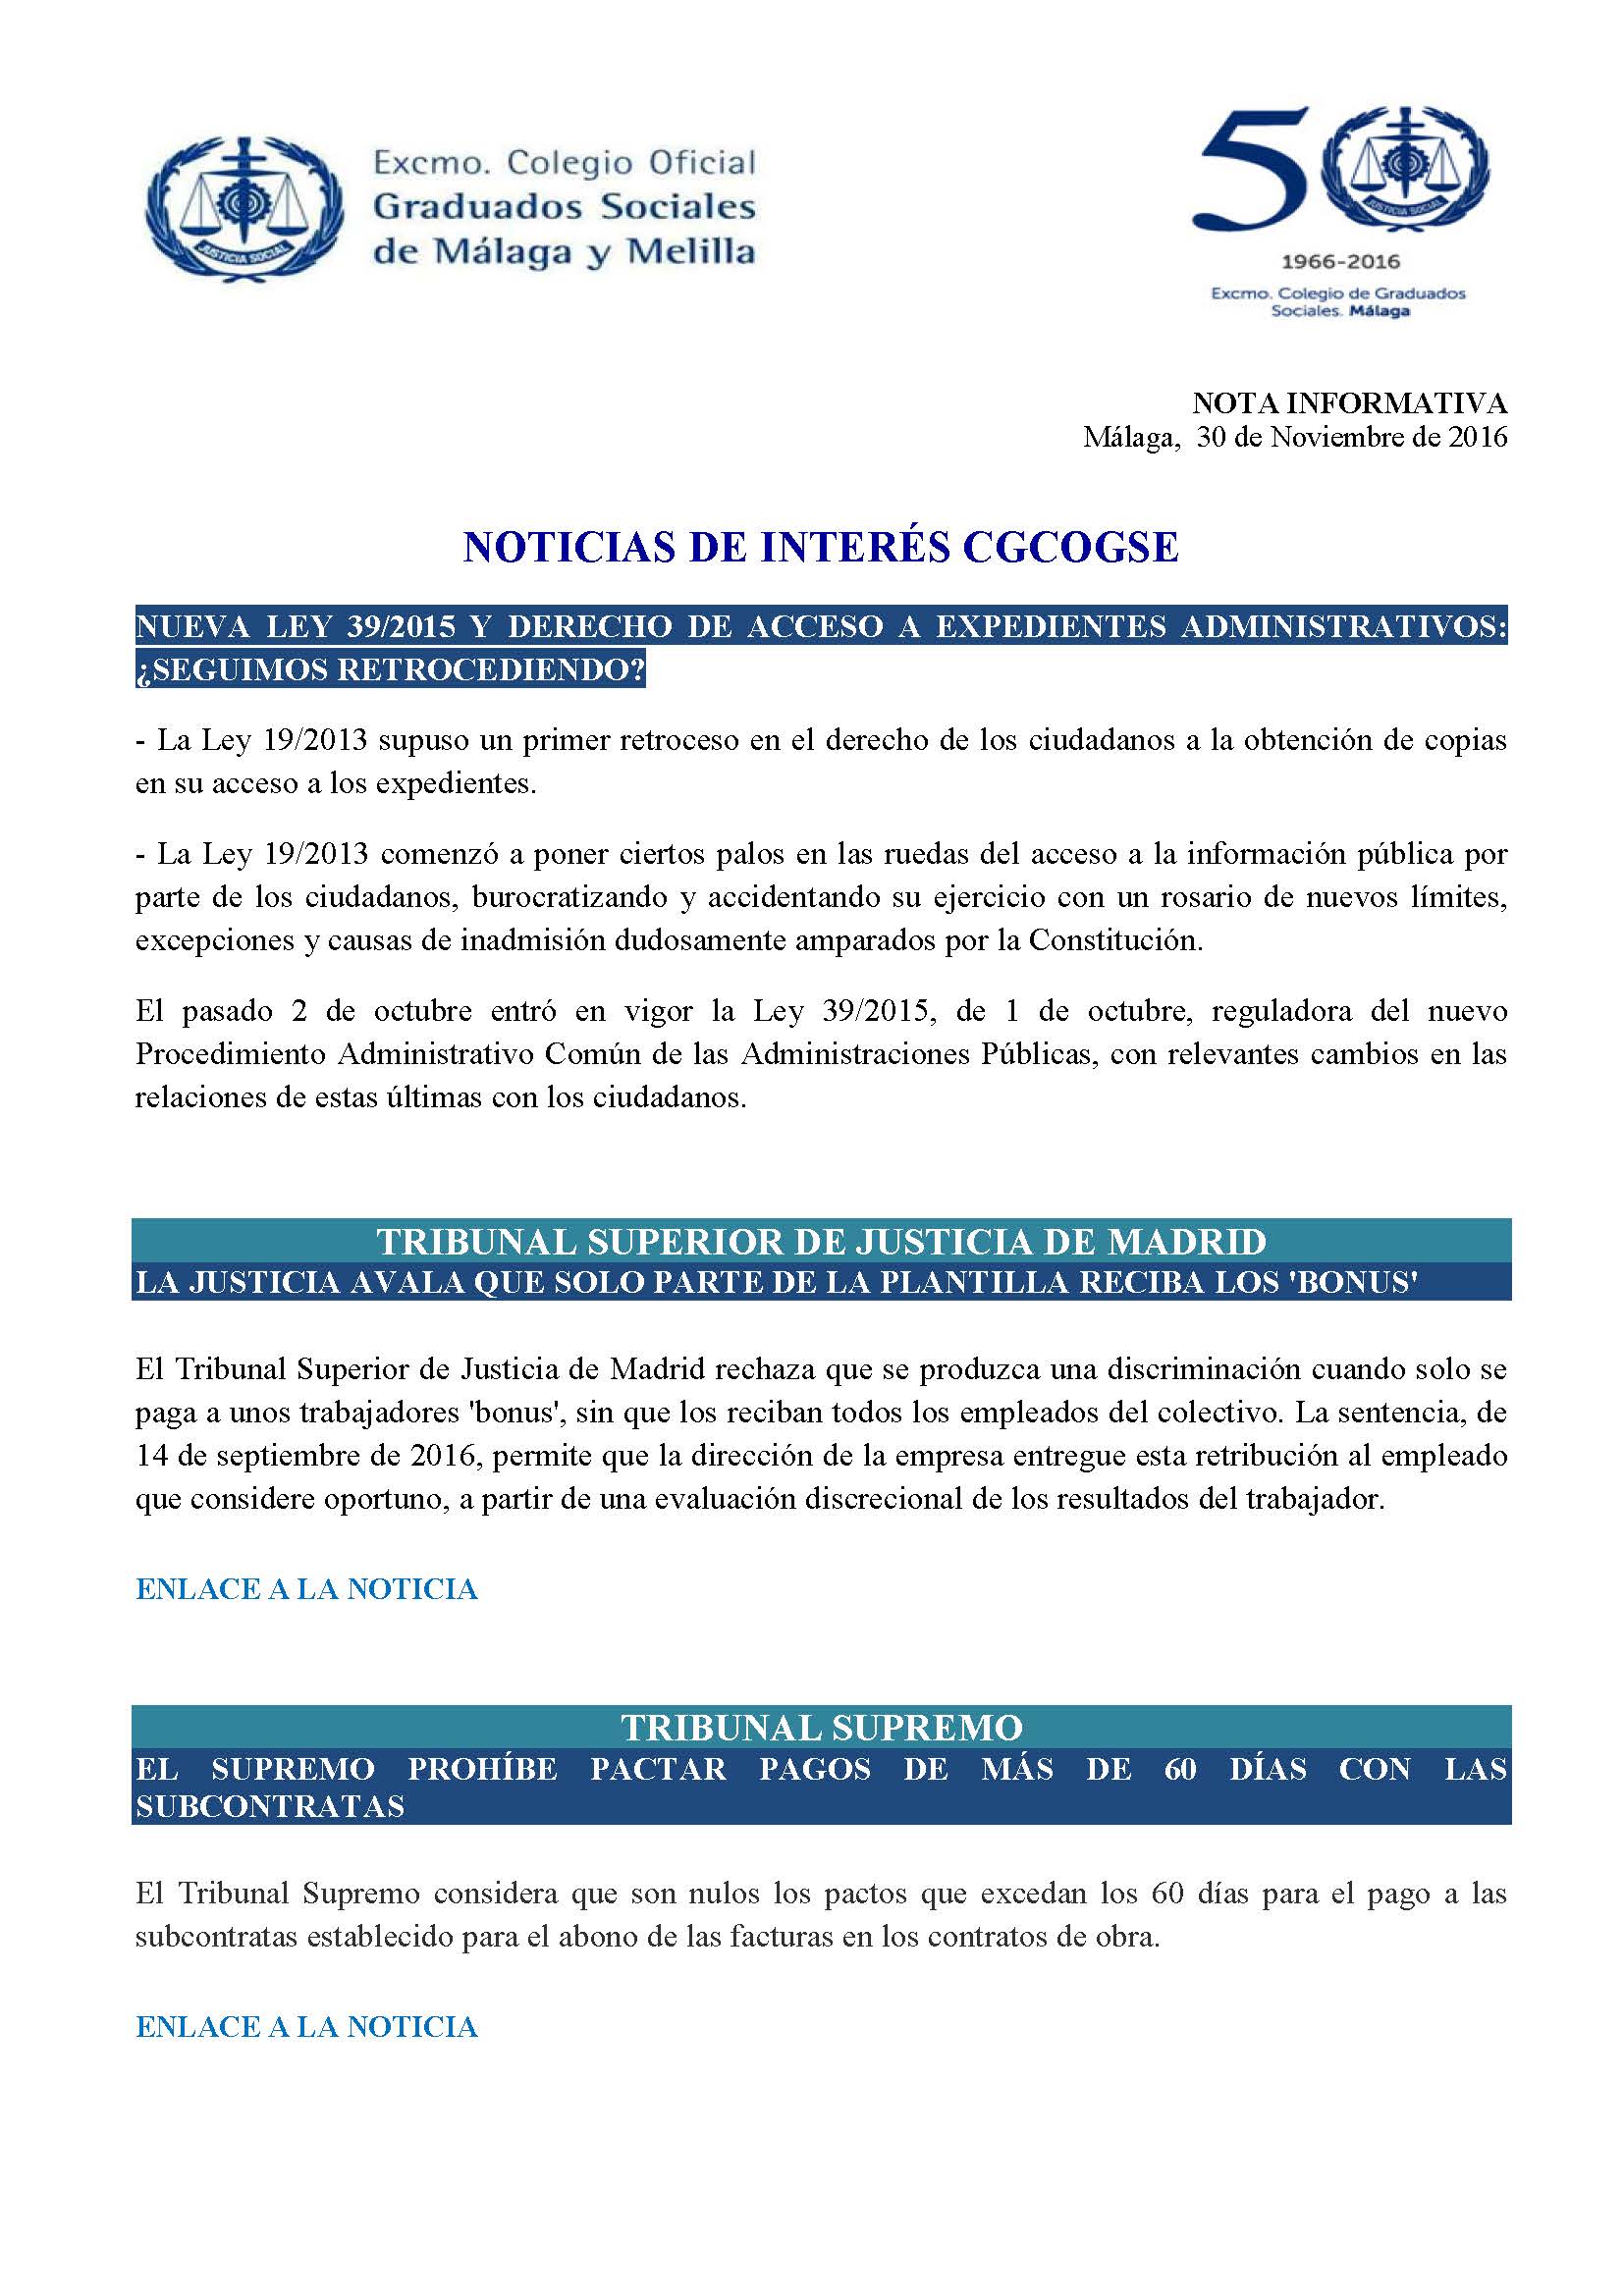 NOTA_INFORMATIVA_NOTICIAS_DE_INTERS_CGCOGSE_30-11-2016_Pgina_1